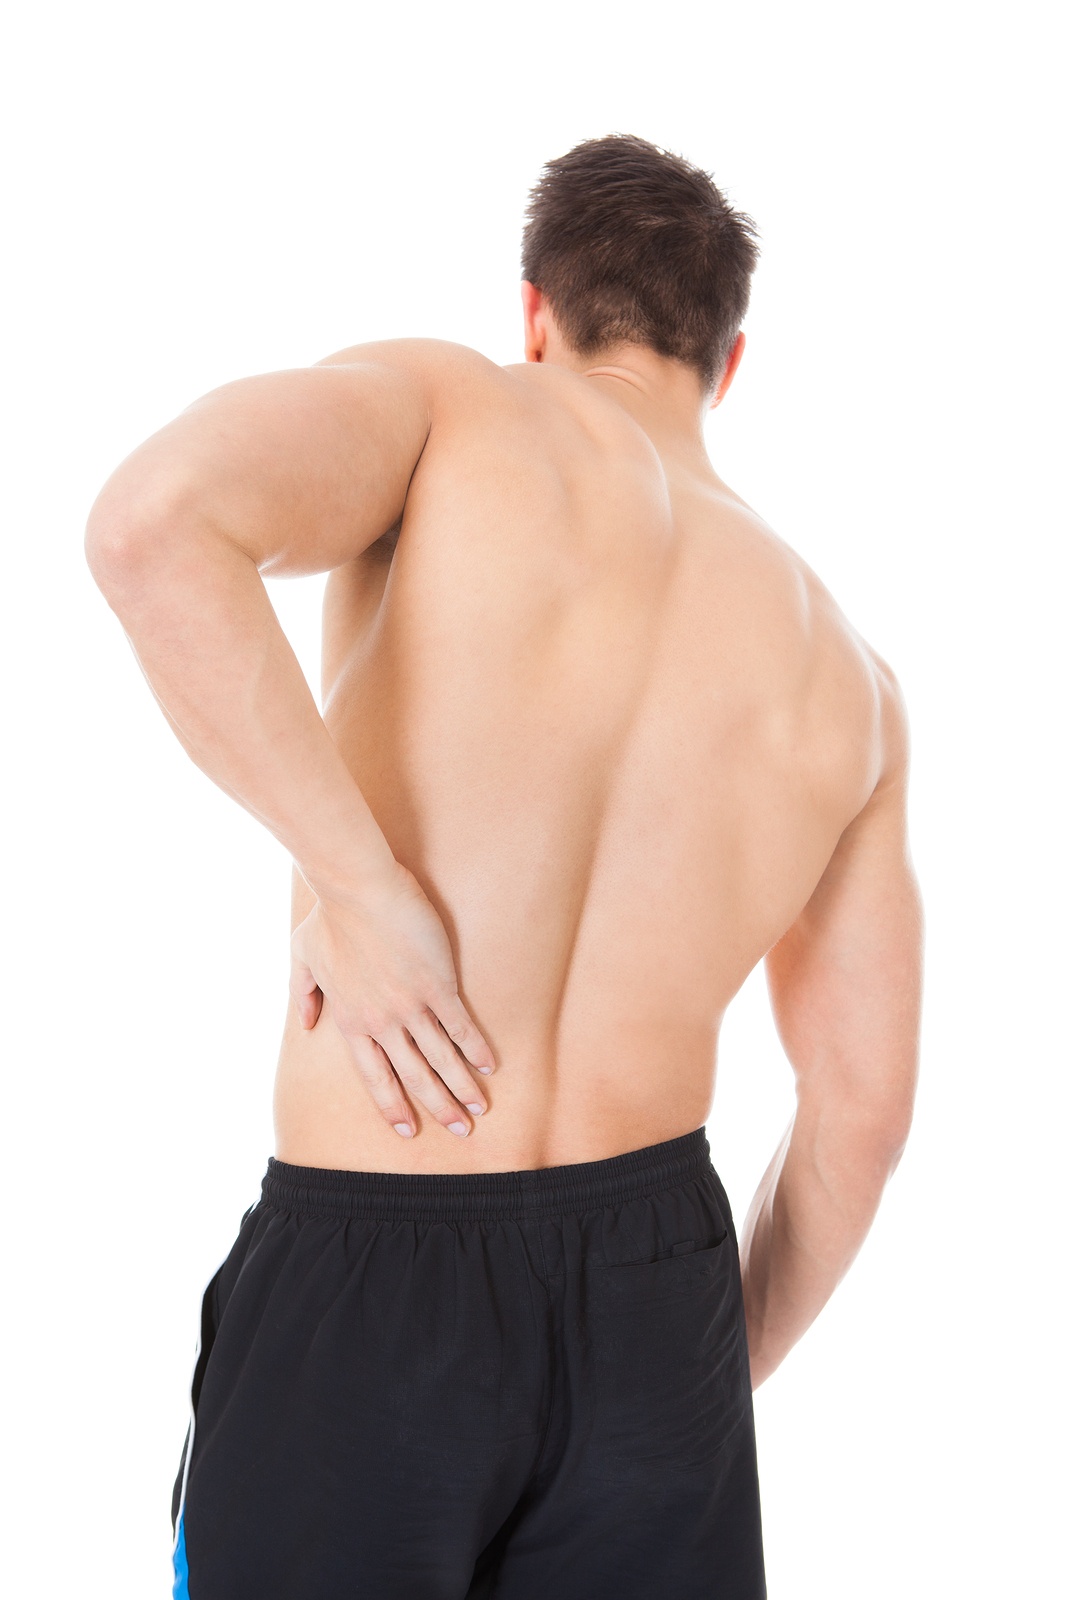 Lower Back Pain, Lower Back, Back Pain, Back Ache, Pinched Nerve, Numbness, arthritis, arthritis relief Tingling,